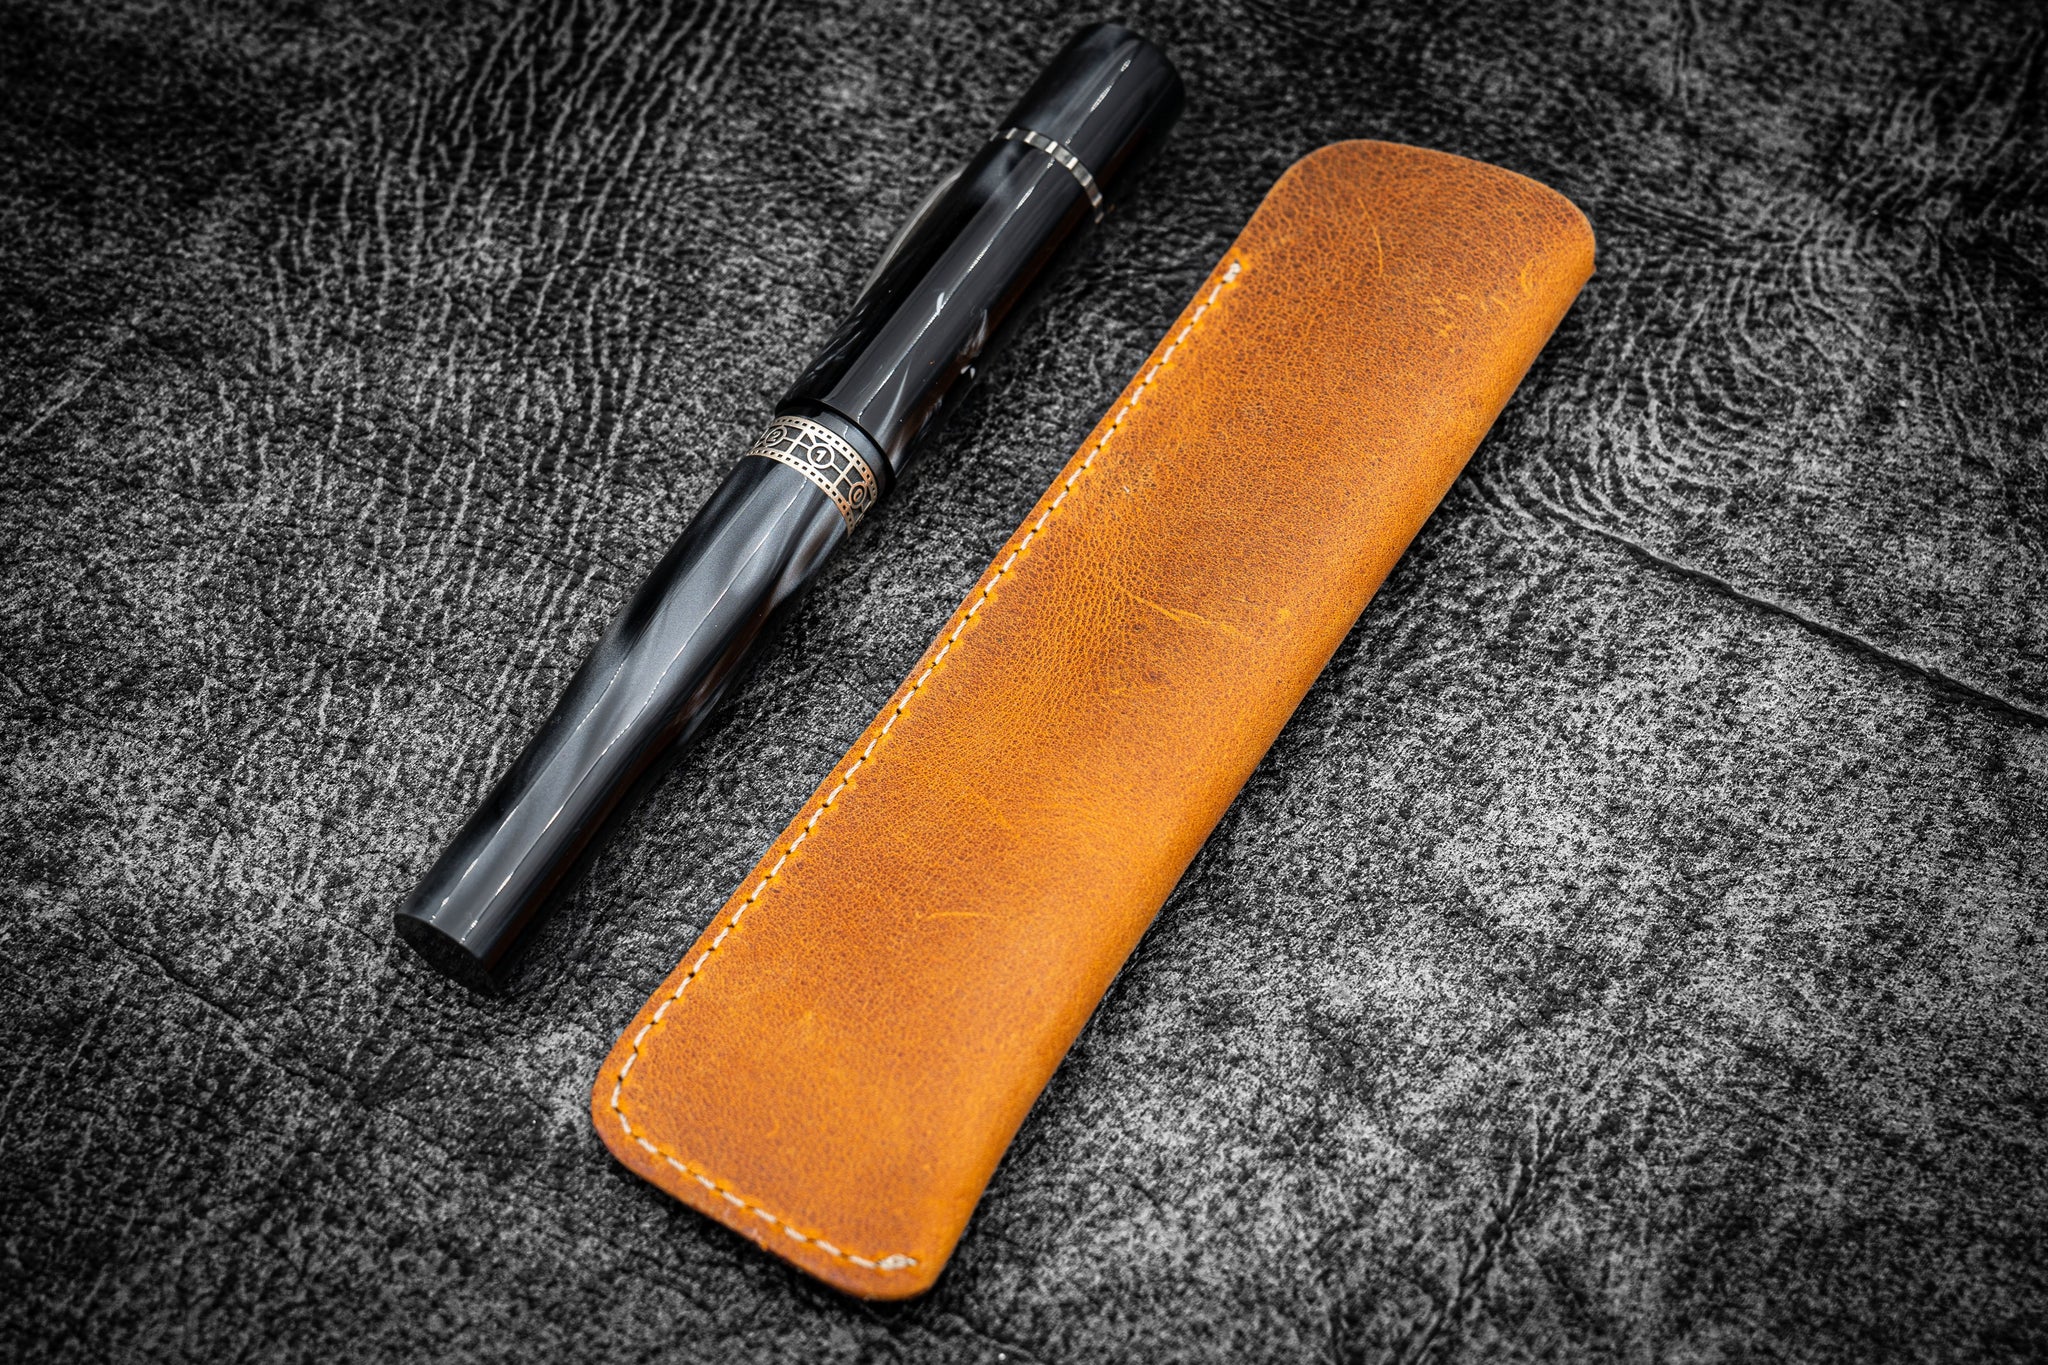 Genuine Leather Fountain Pen Case Cowhide Black 3 Pen Holder Case